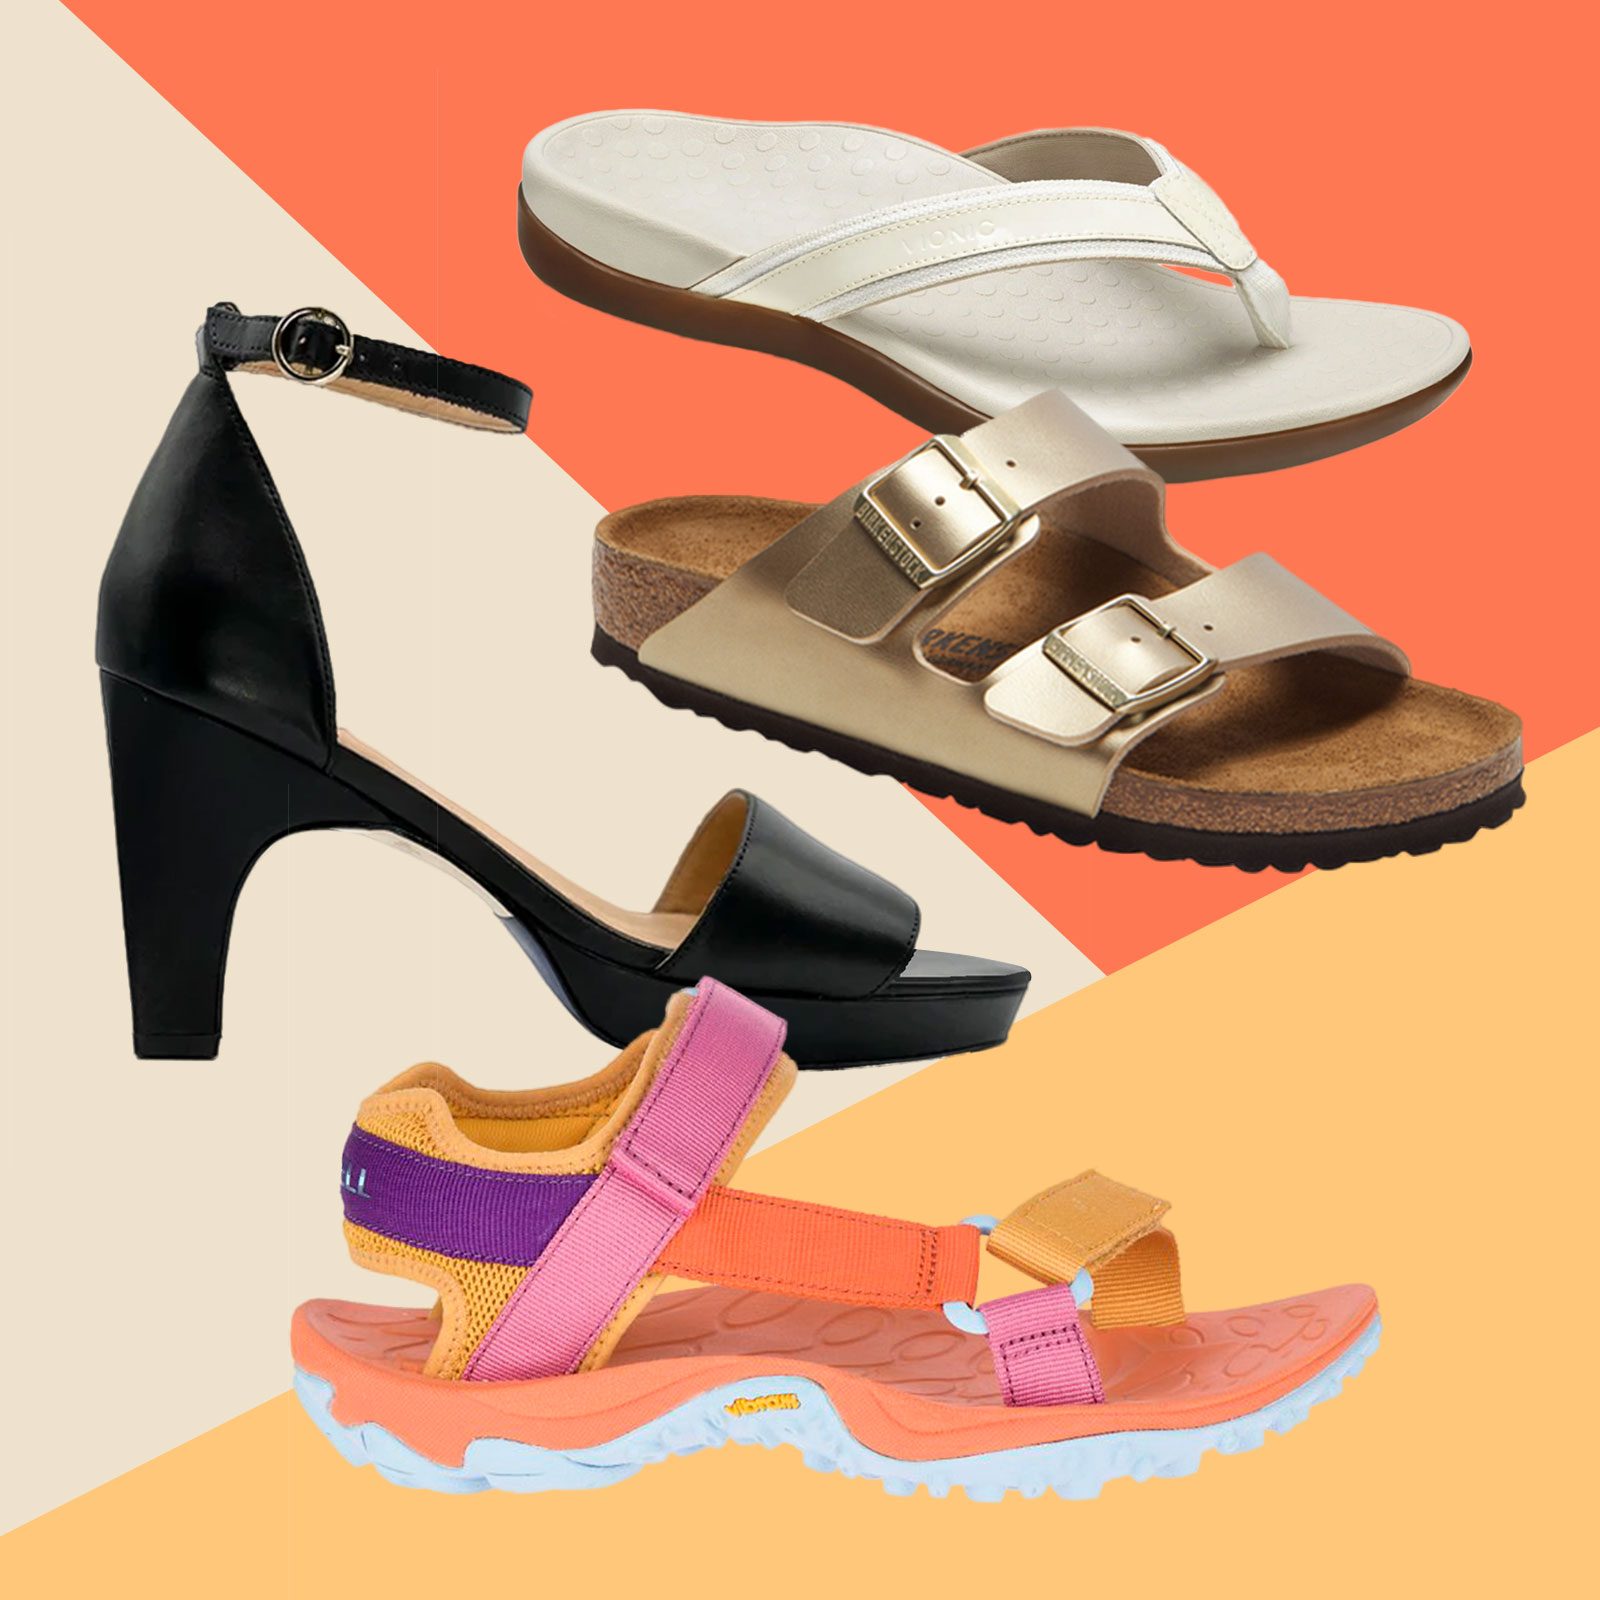 Niceast Womens Sandals Buckle Open Toe Strap Comfortable Cute Flat Sandals Casual Summer Beach Sandals for Women 